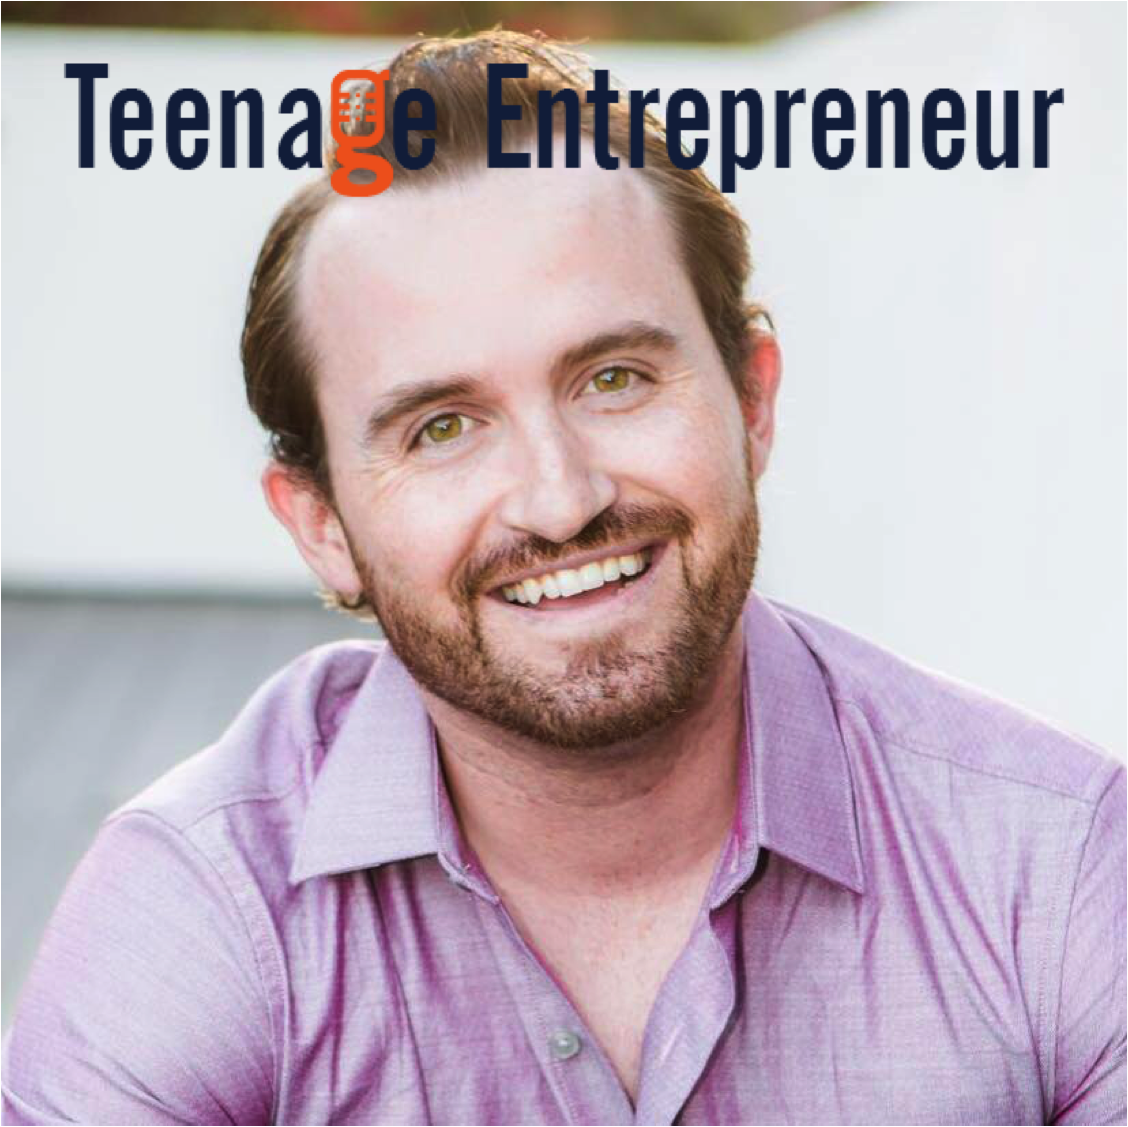 Teenage Entrepreneur Interview